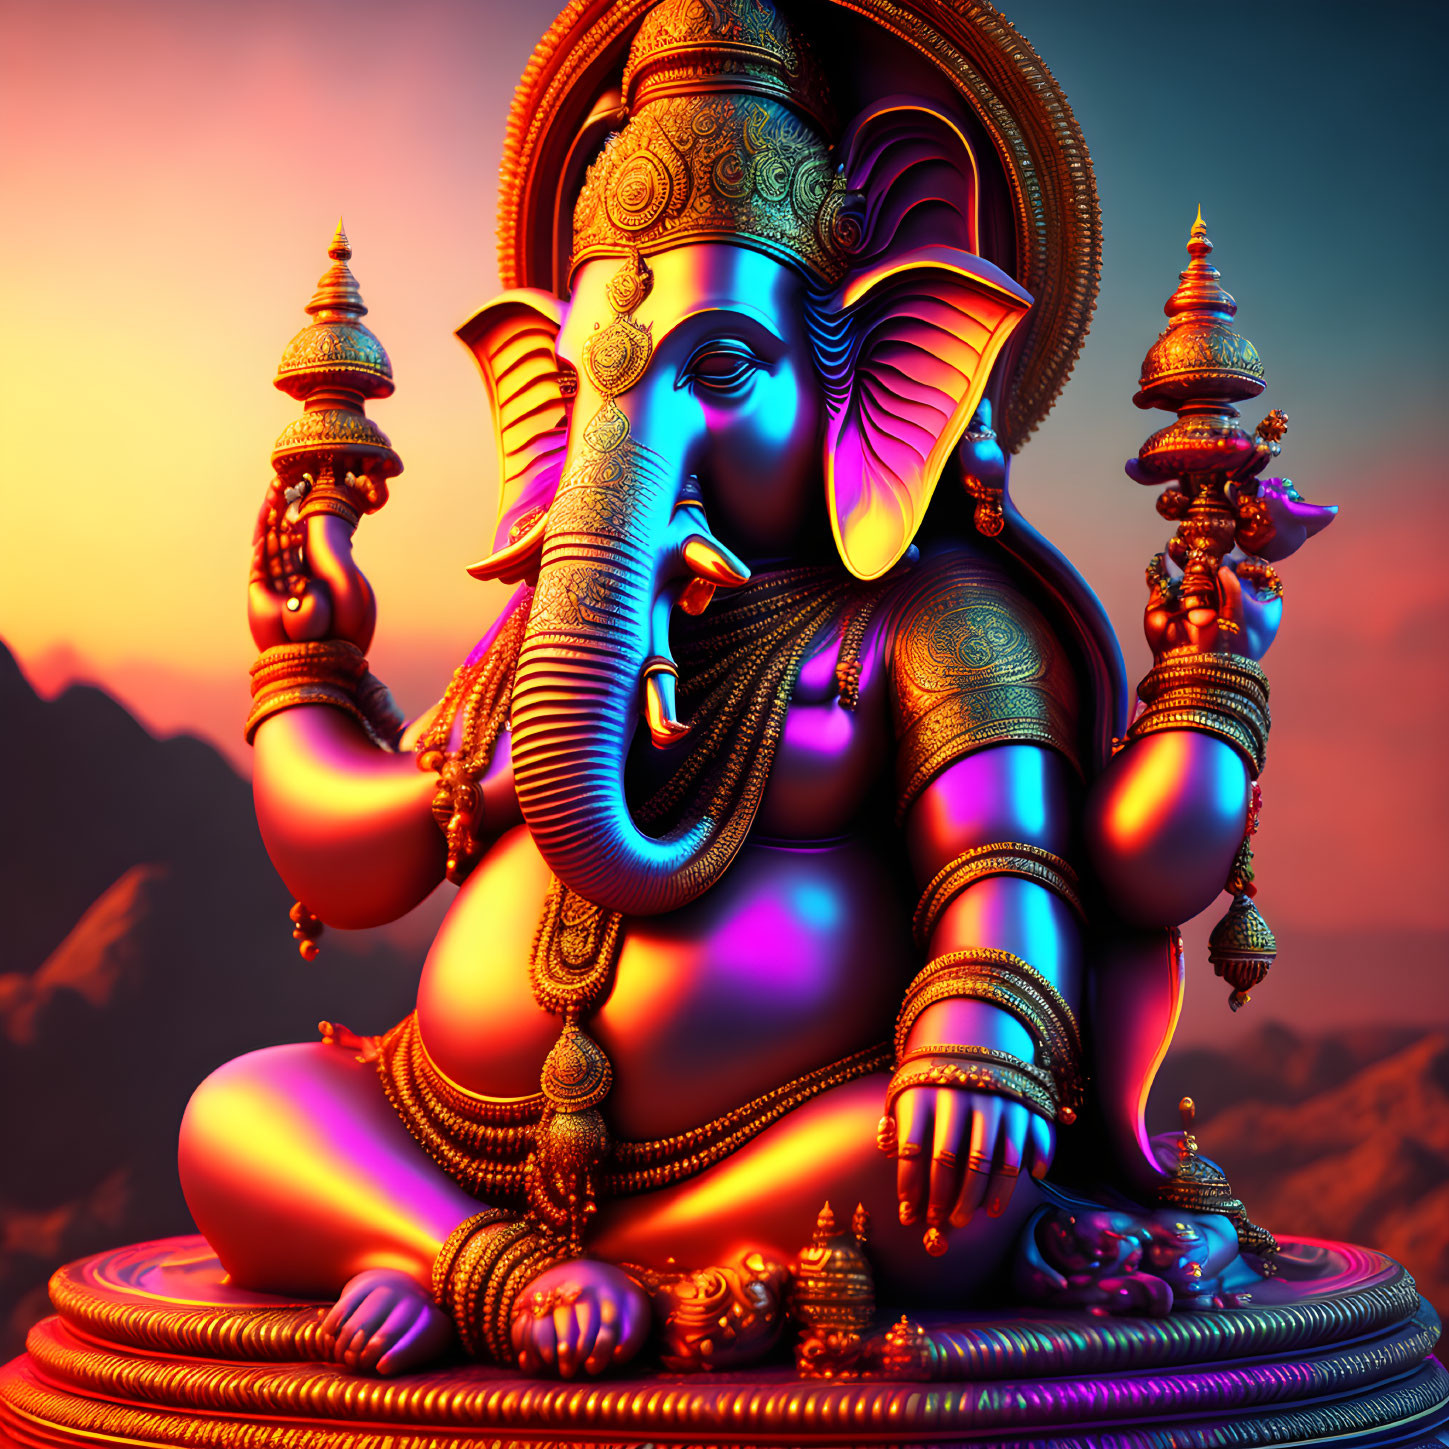 Detailed Lord Ganesha digital artwork in warm tones against mountainous backdrop